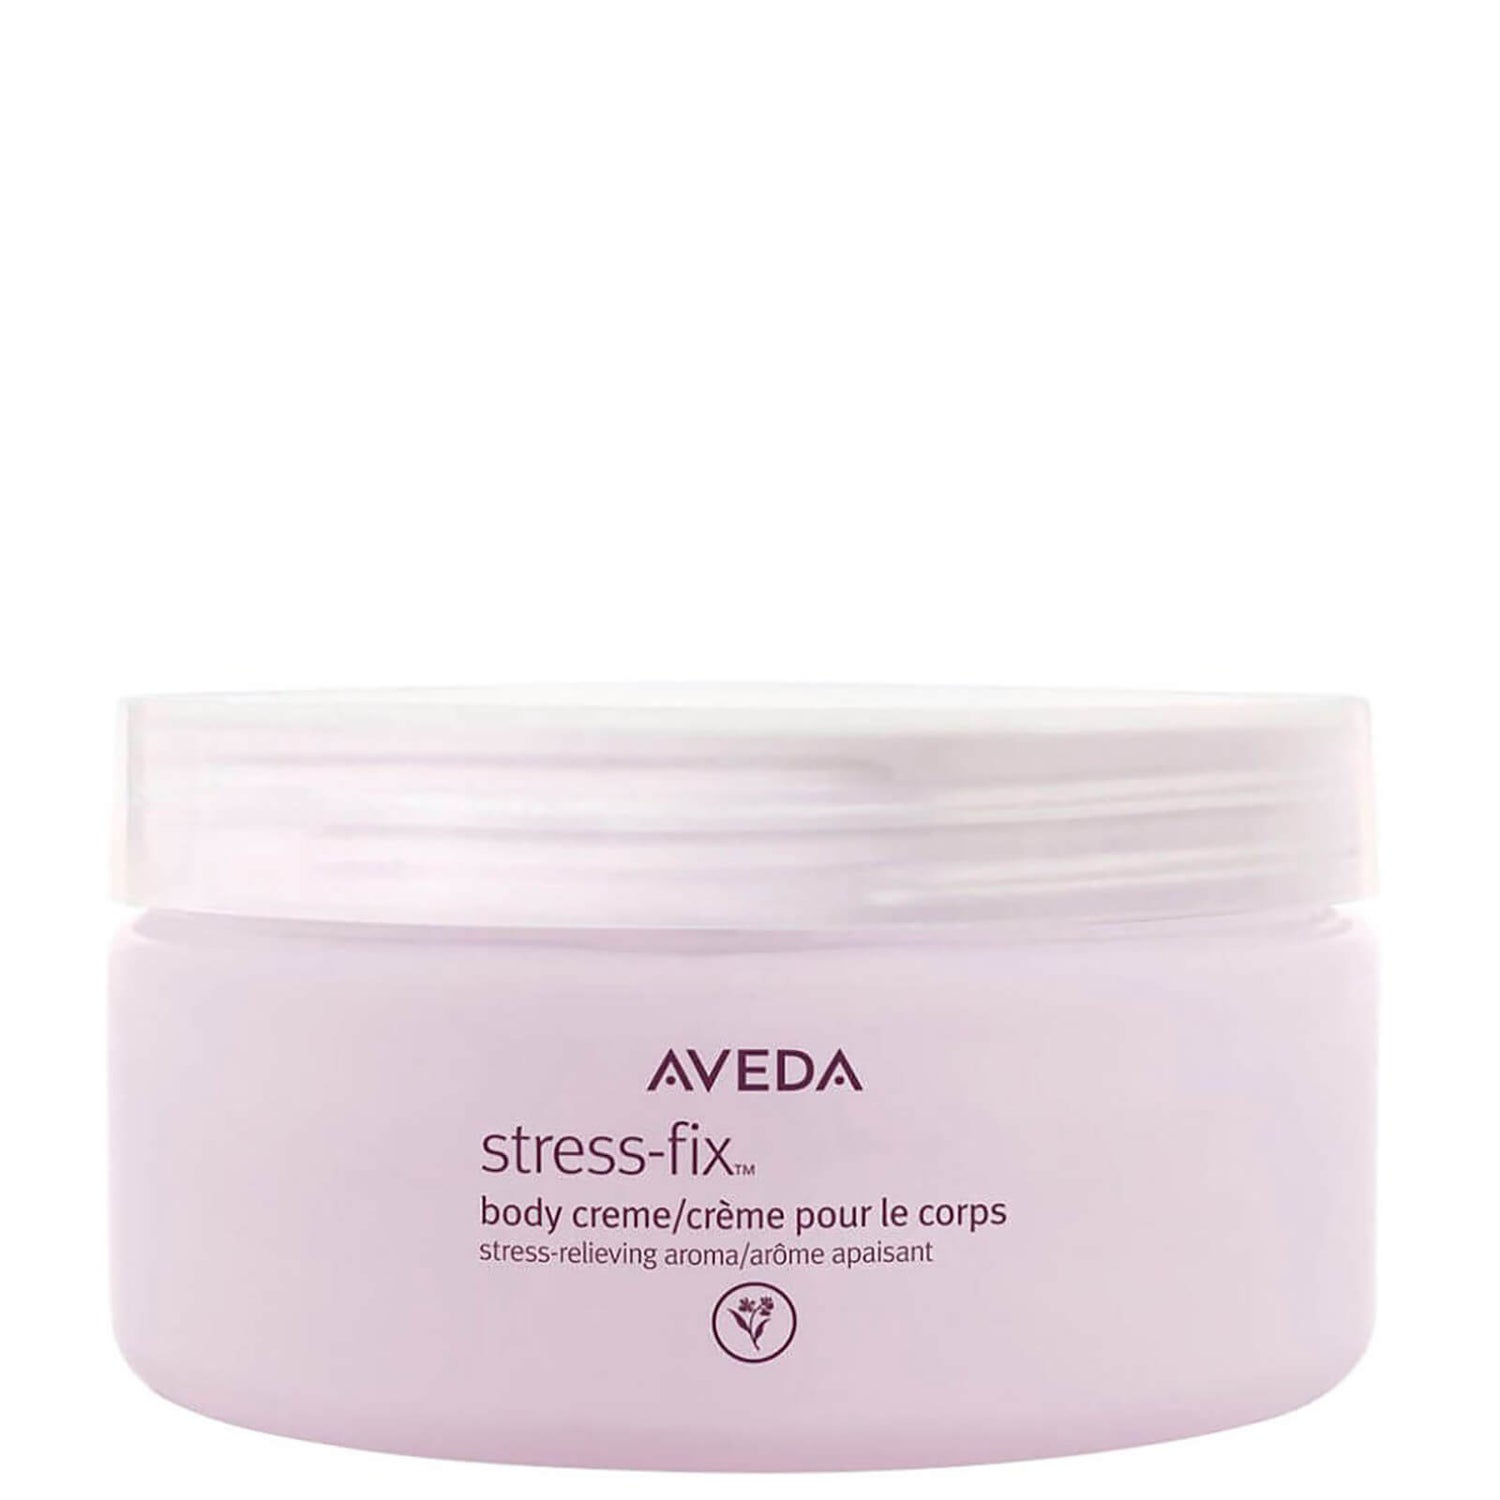 Aveda Stress-Fix Body Creme 200 ml